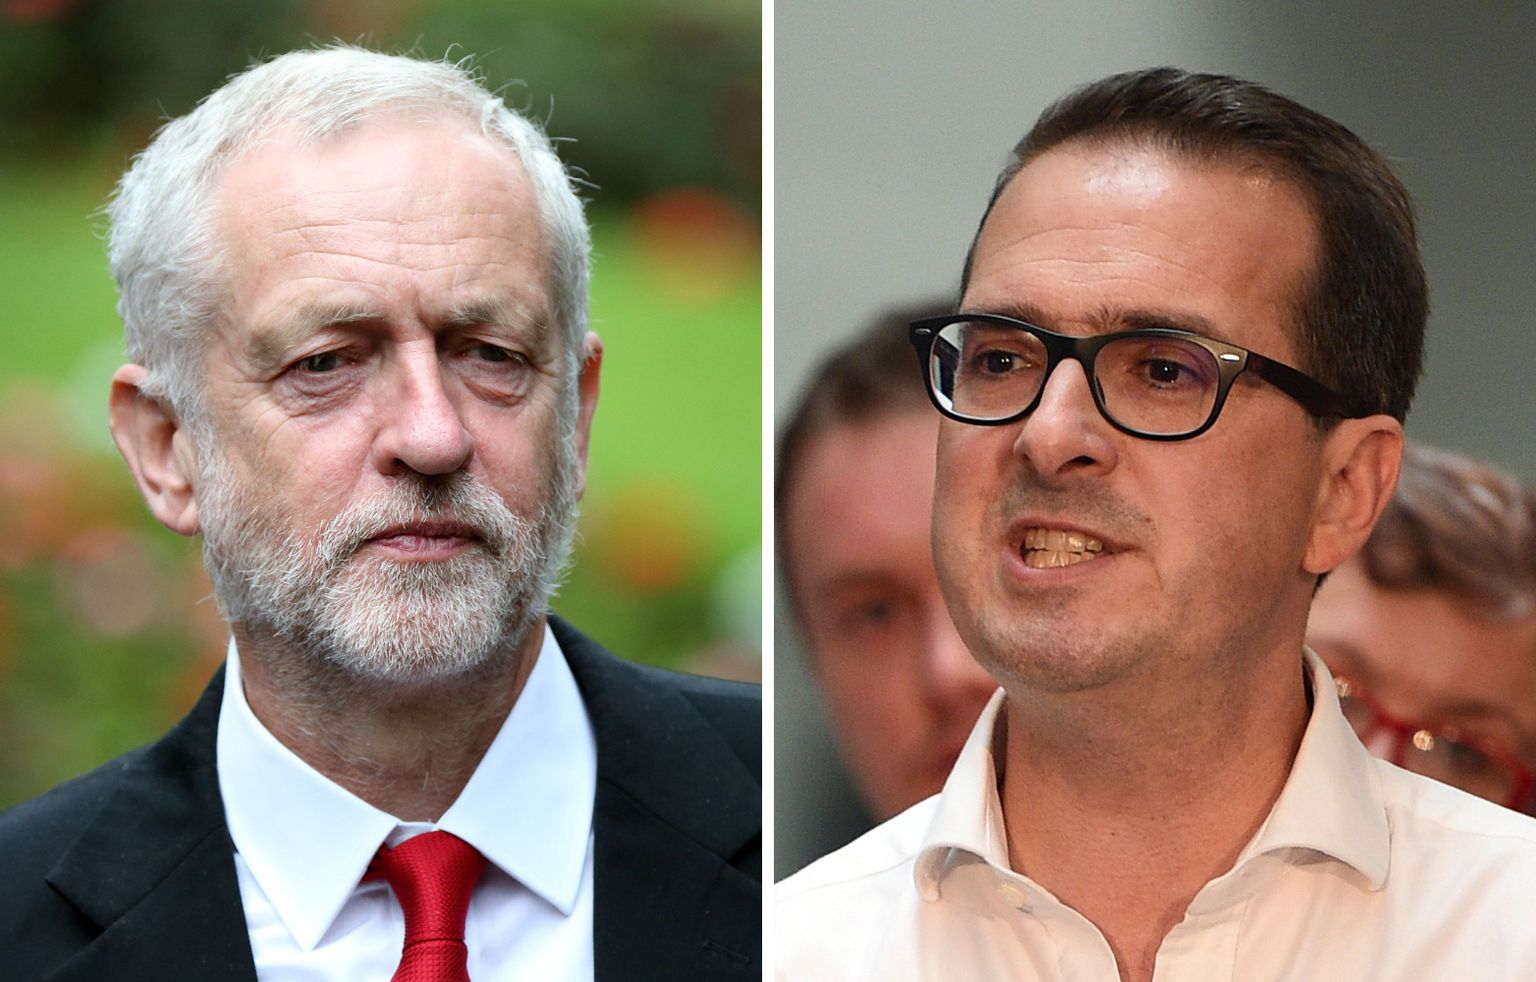 Tööpartei praegune juht Jeremy Corbyn (vasakul) ja tema rivaal Owen Smith.